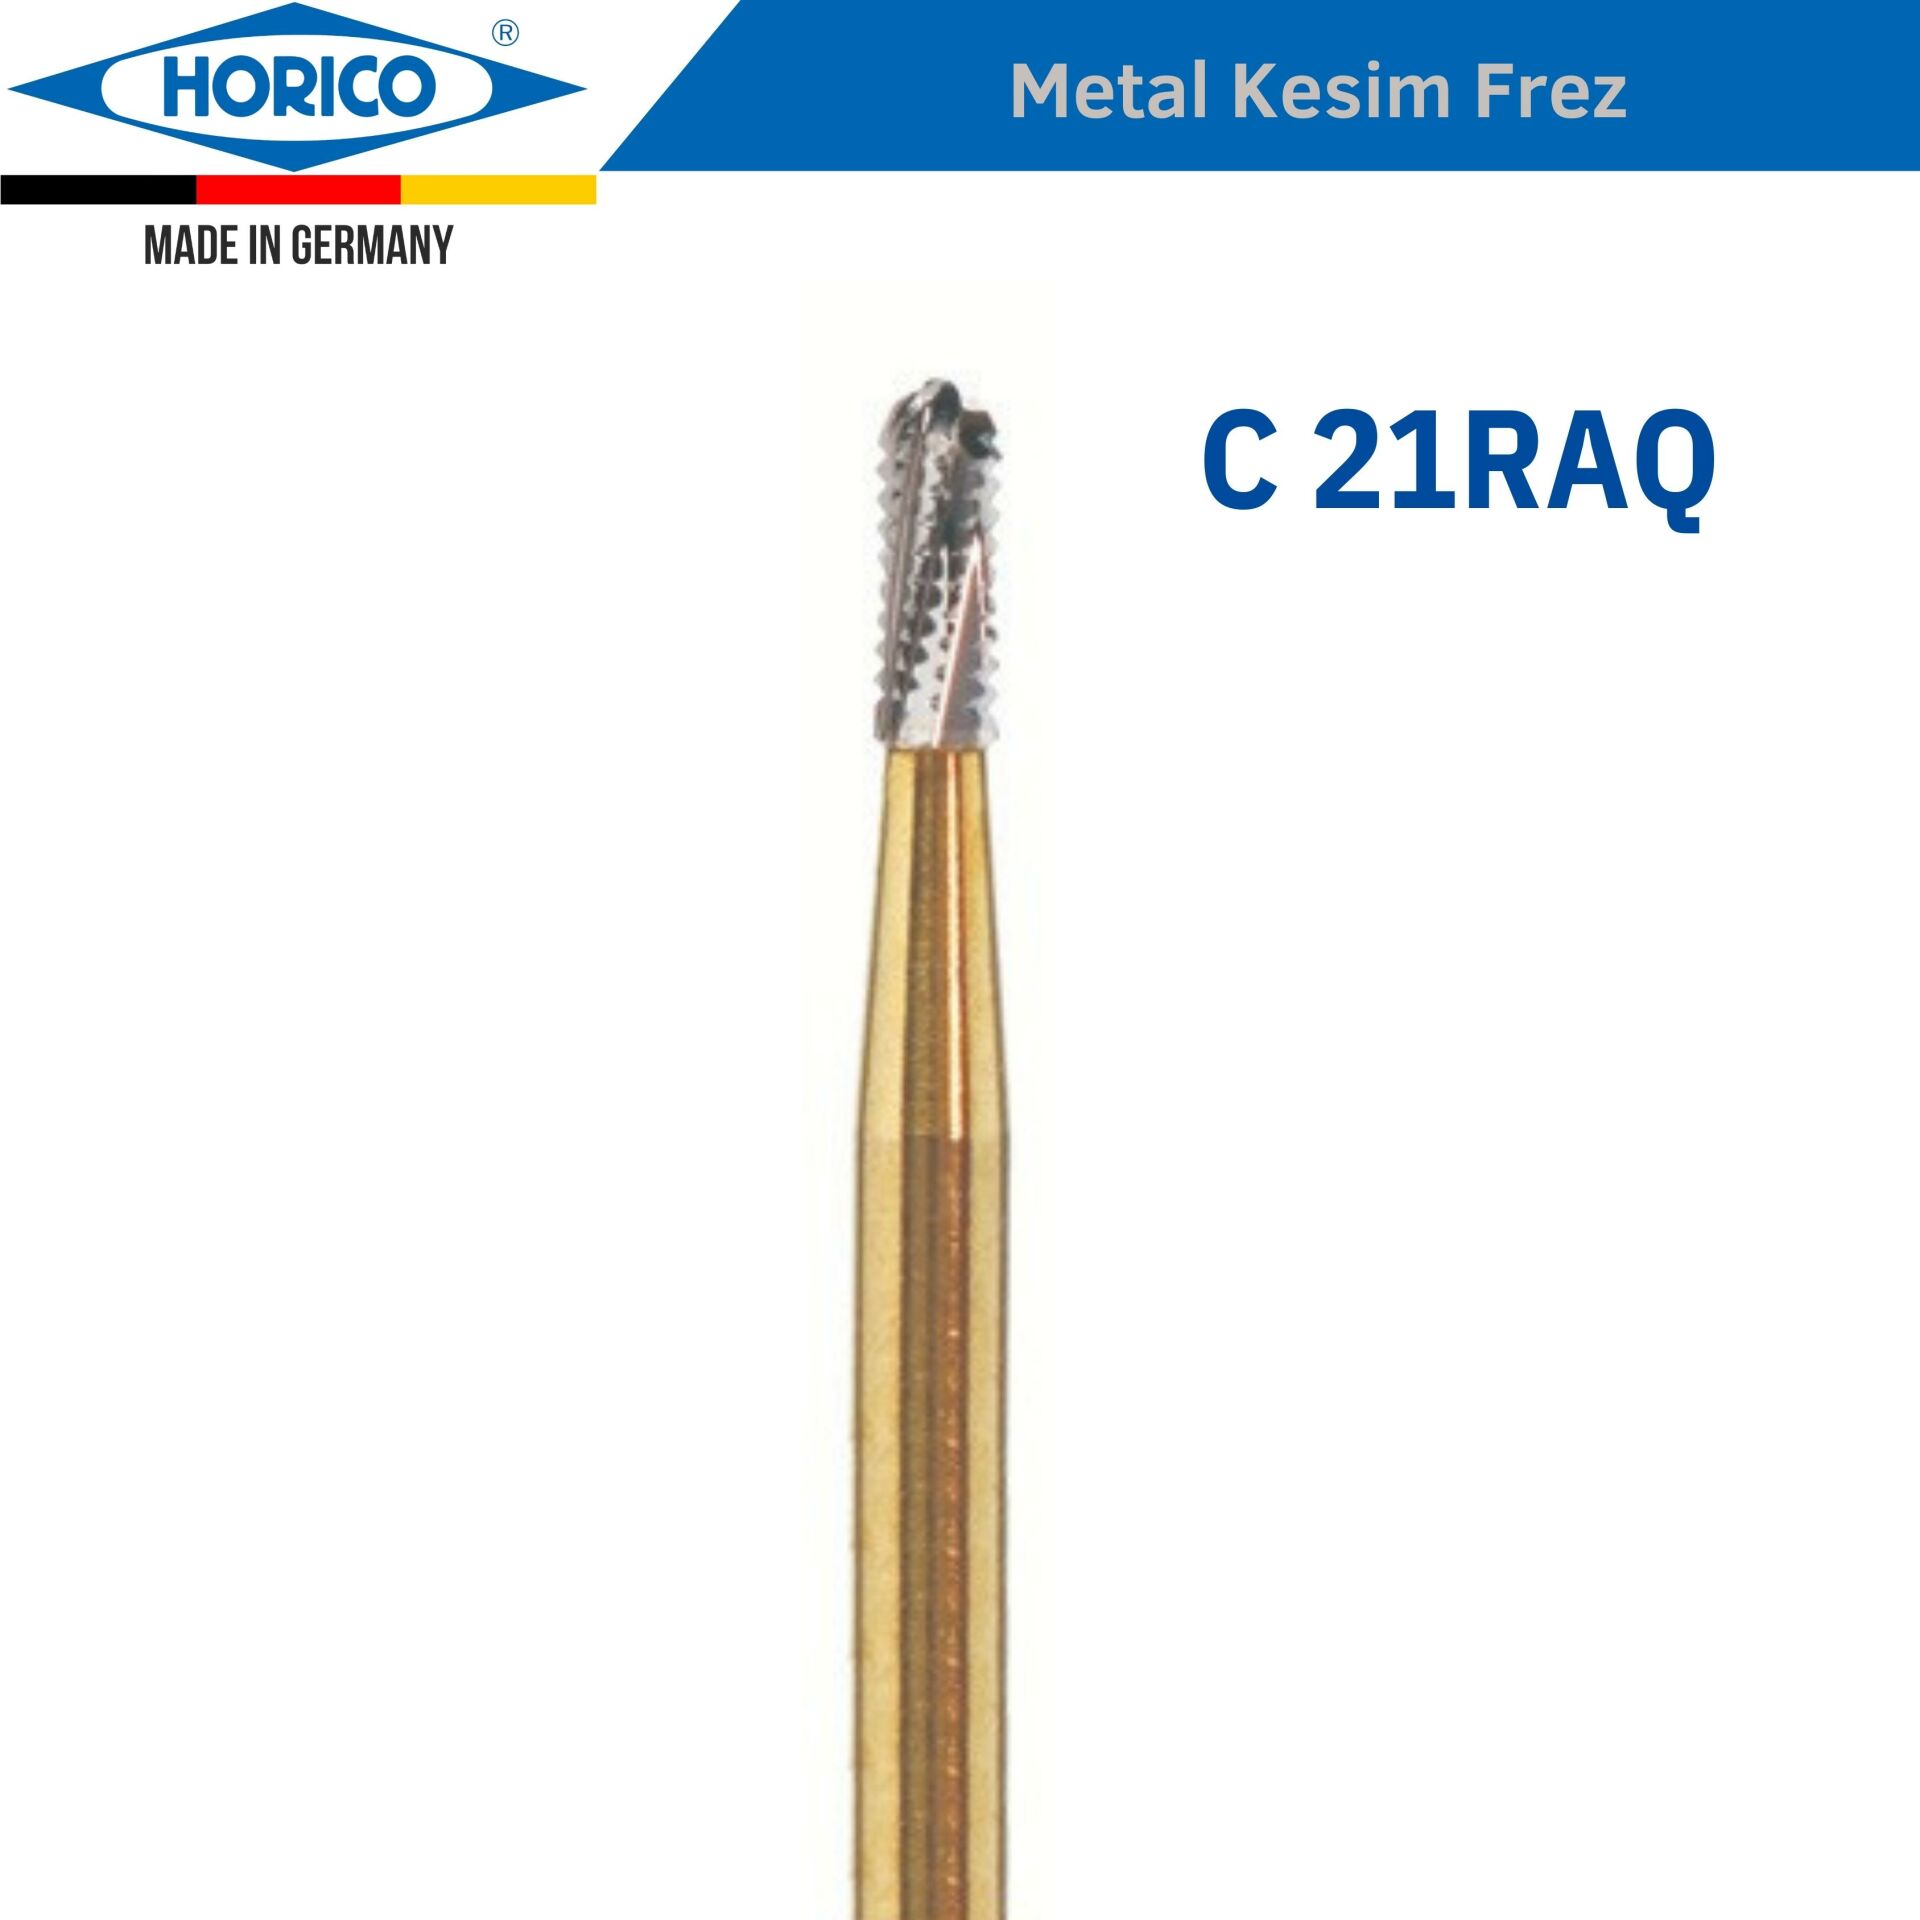 Metal Kesim Frezi - Horico C 21RAQ 5'li